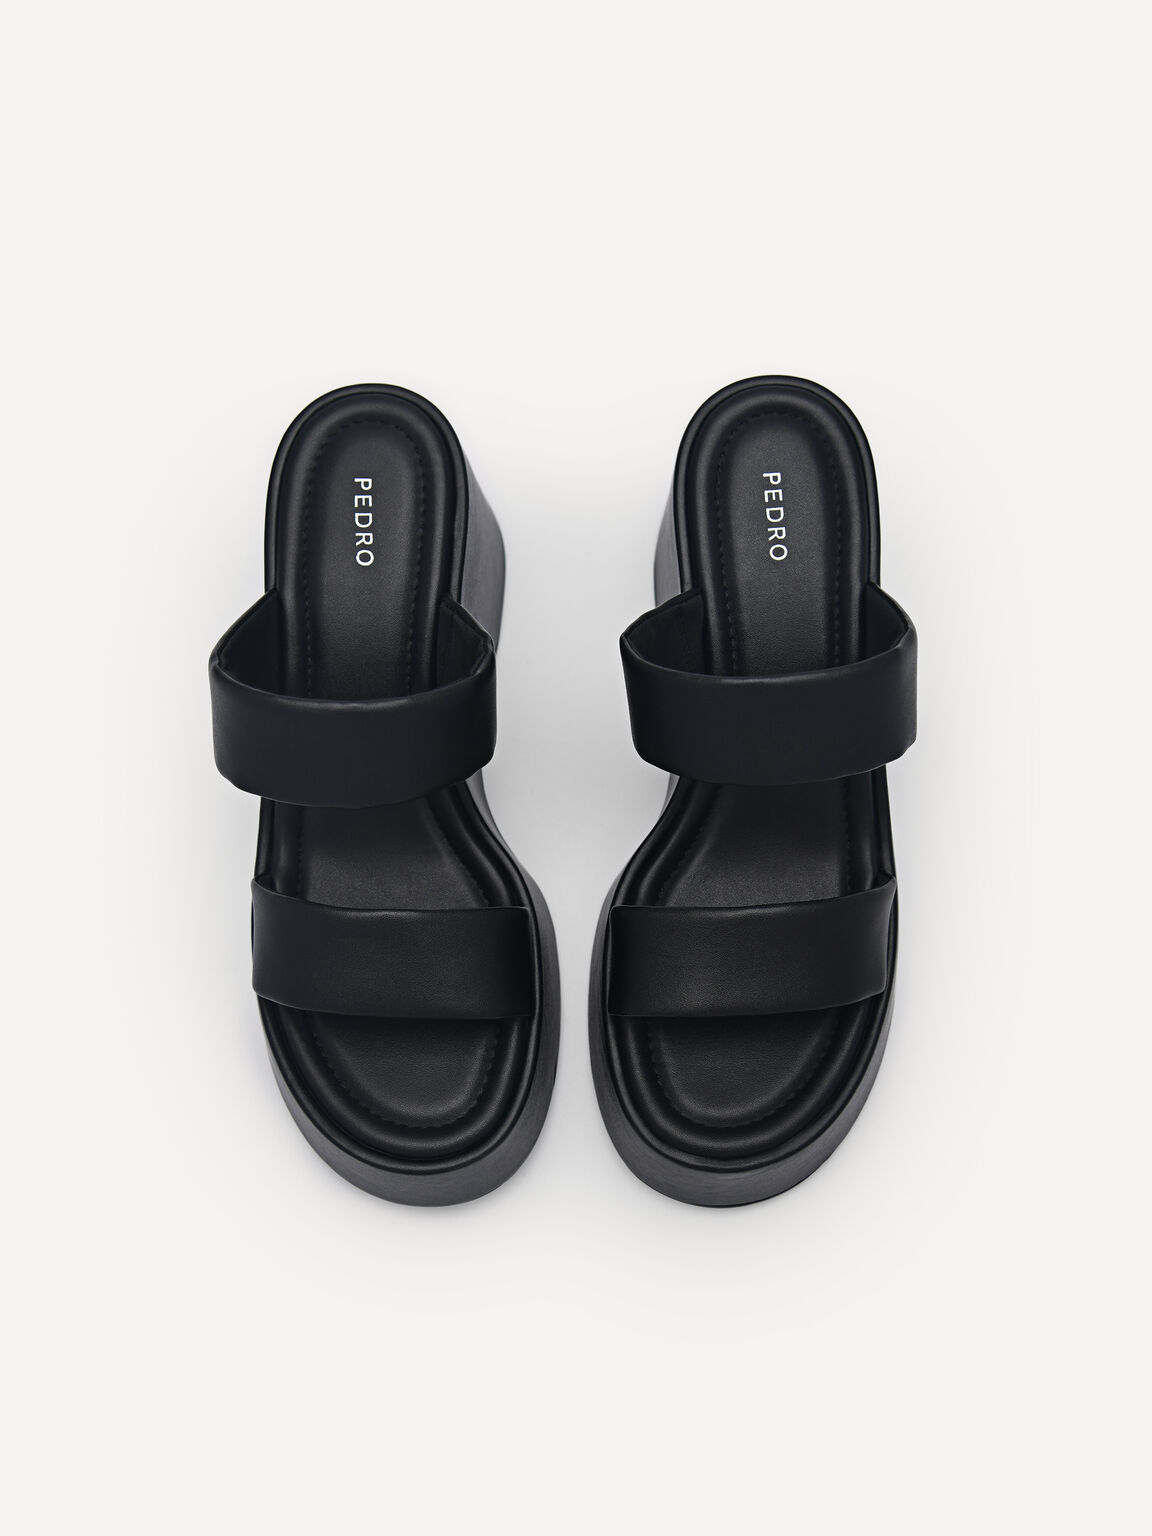 Bianca Wedge Sandals, Black